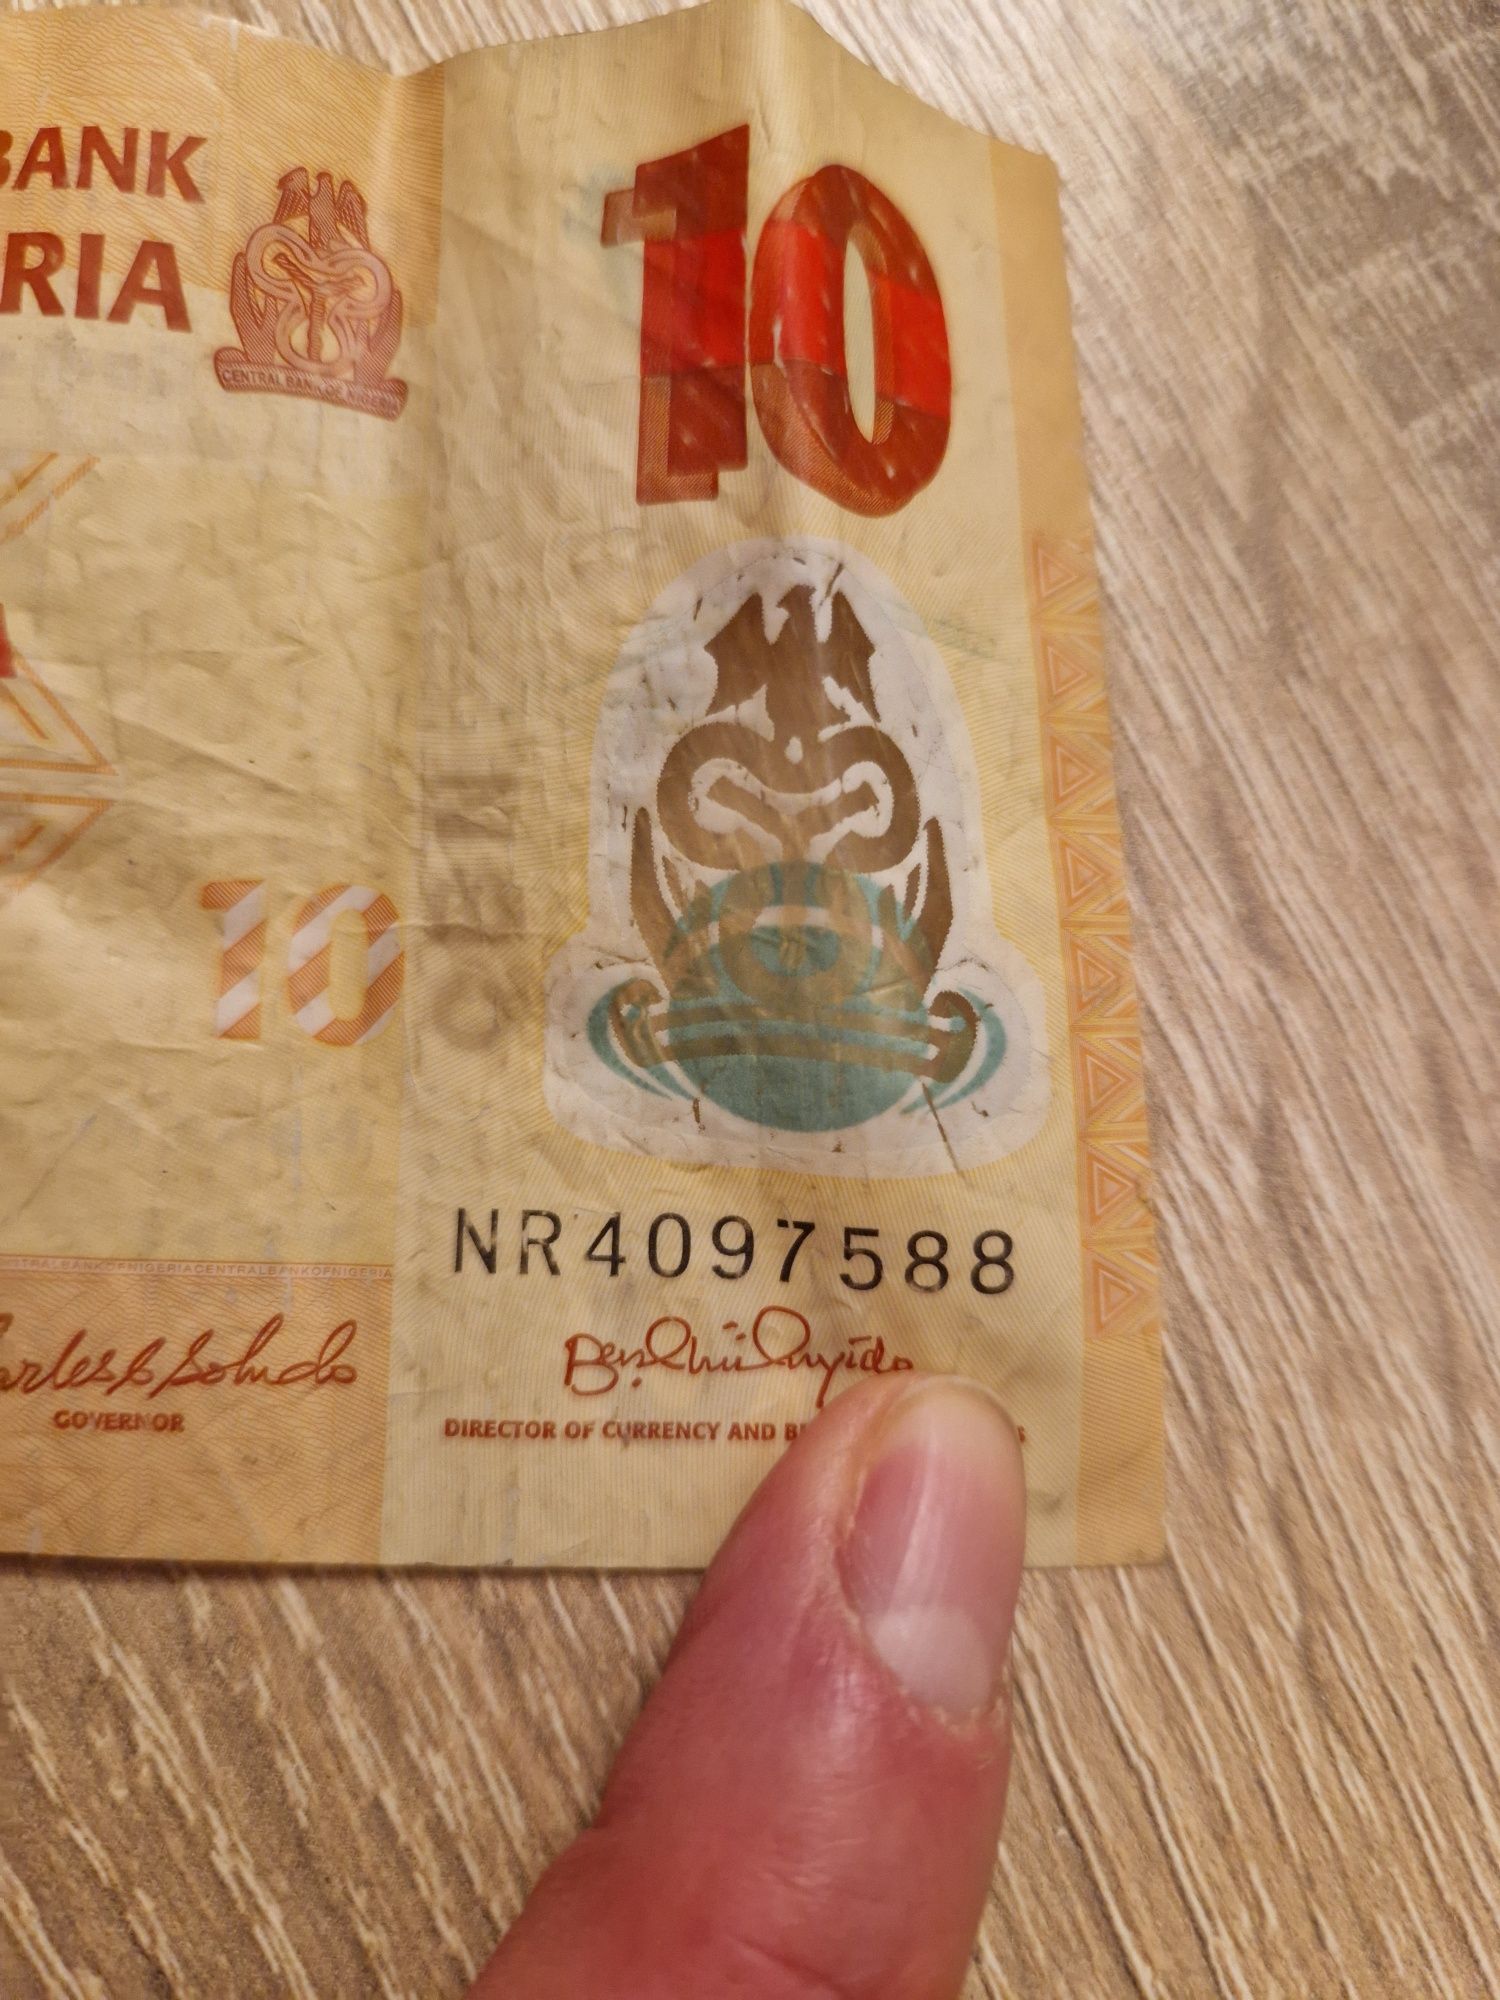 10 NAIR banknot z Nigerii